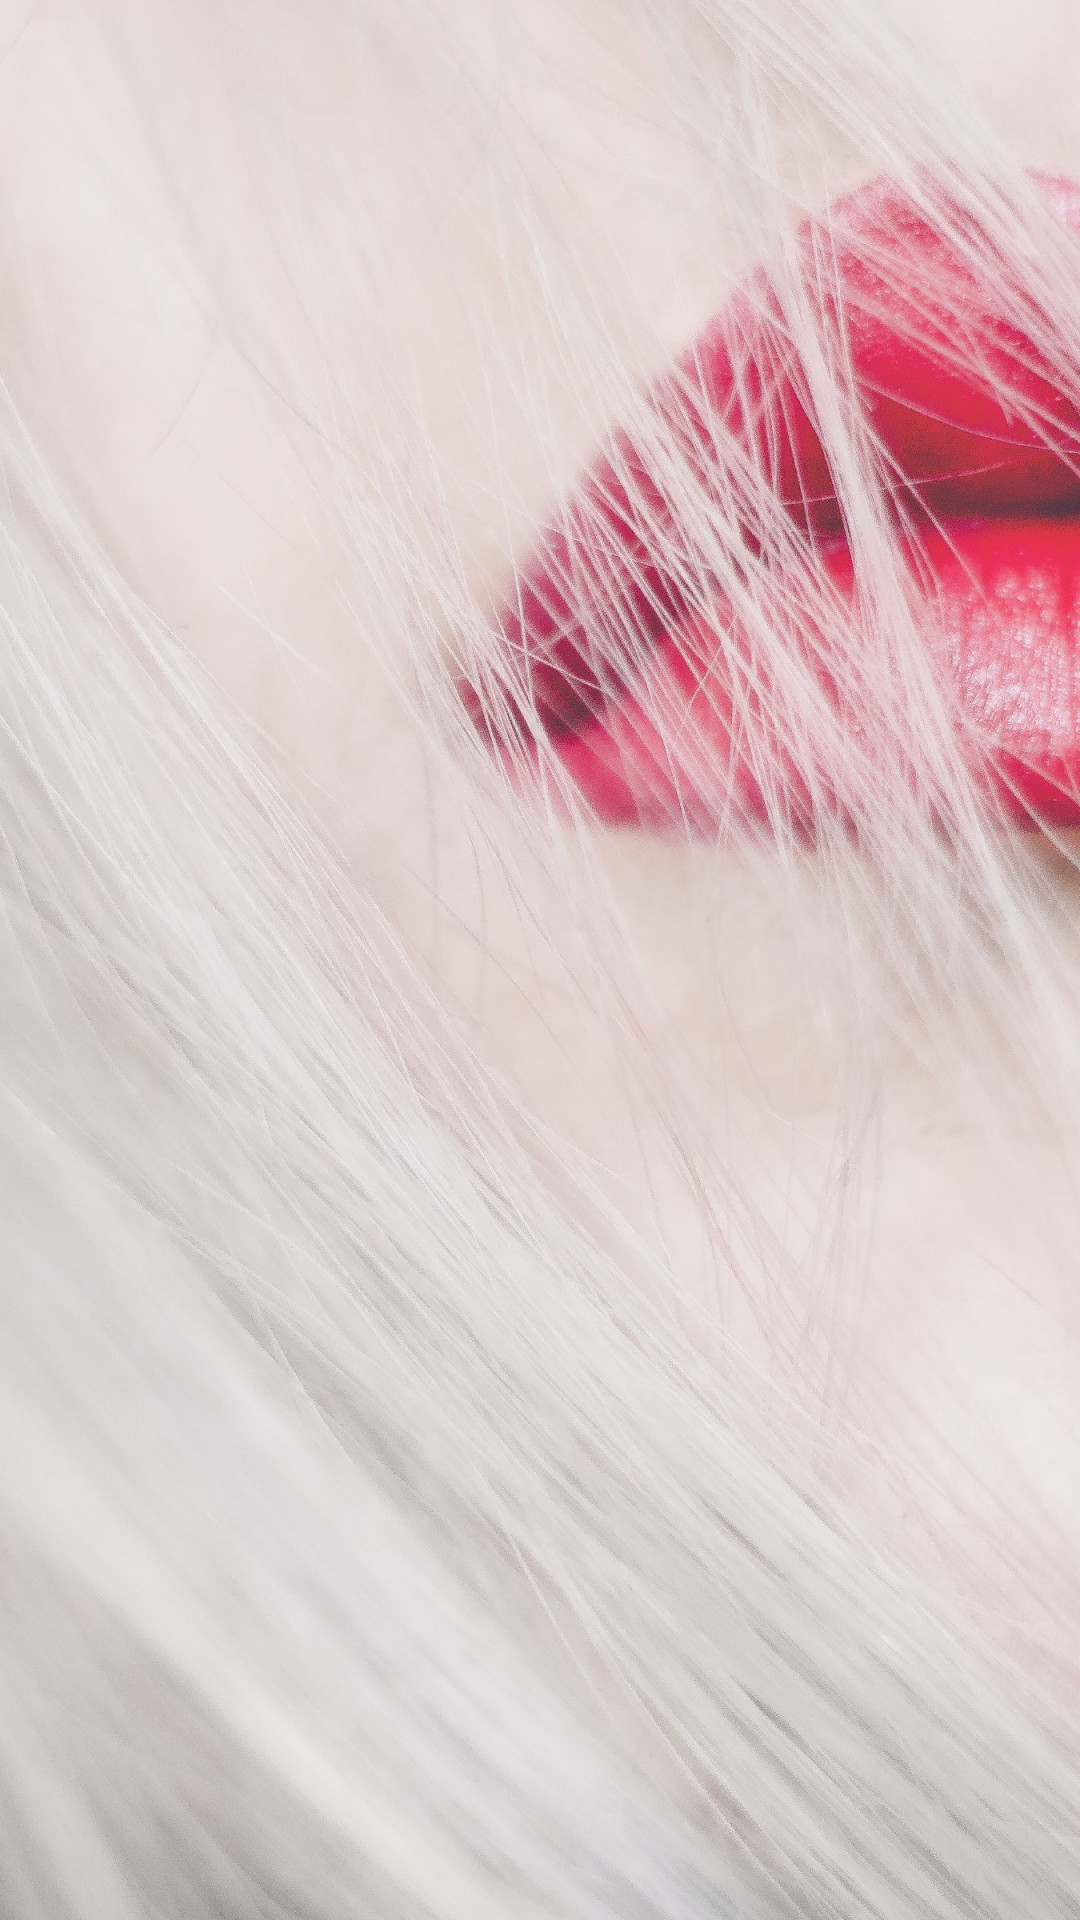 Red lips wallpaper 1080x1920